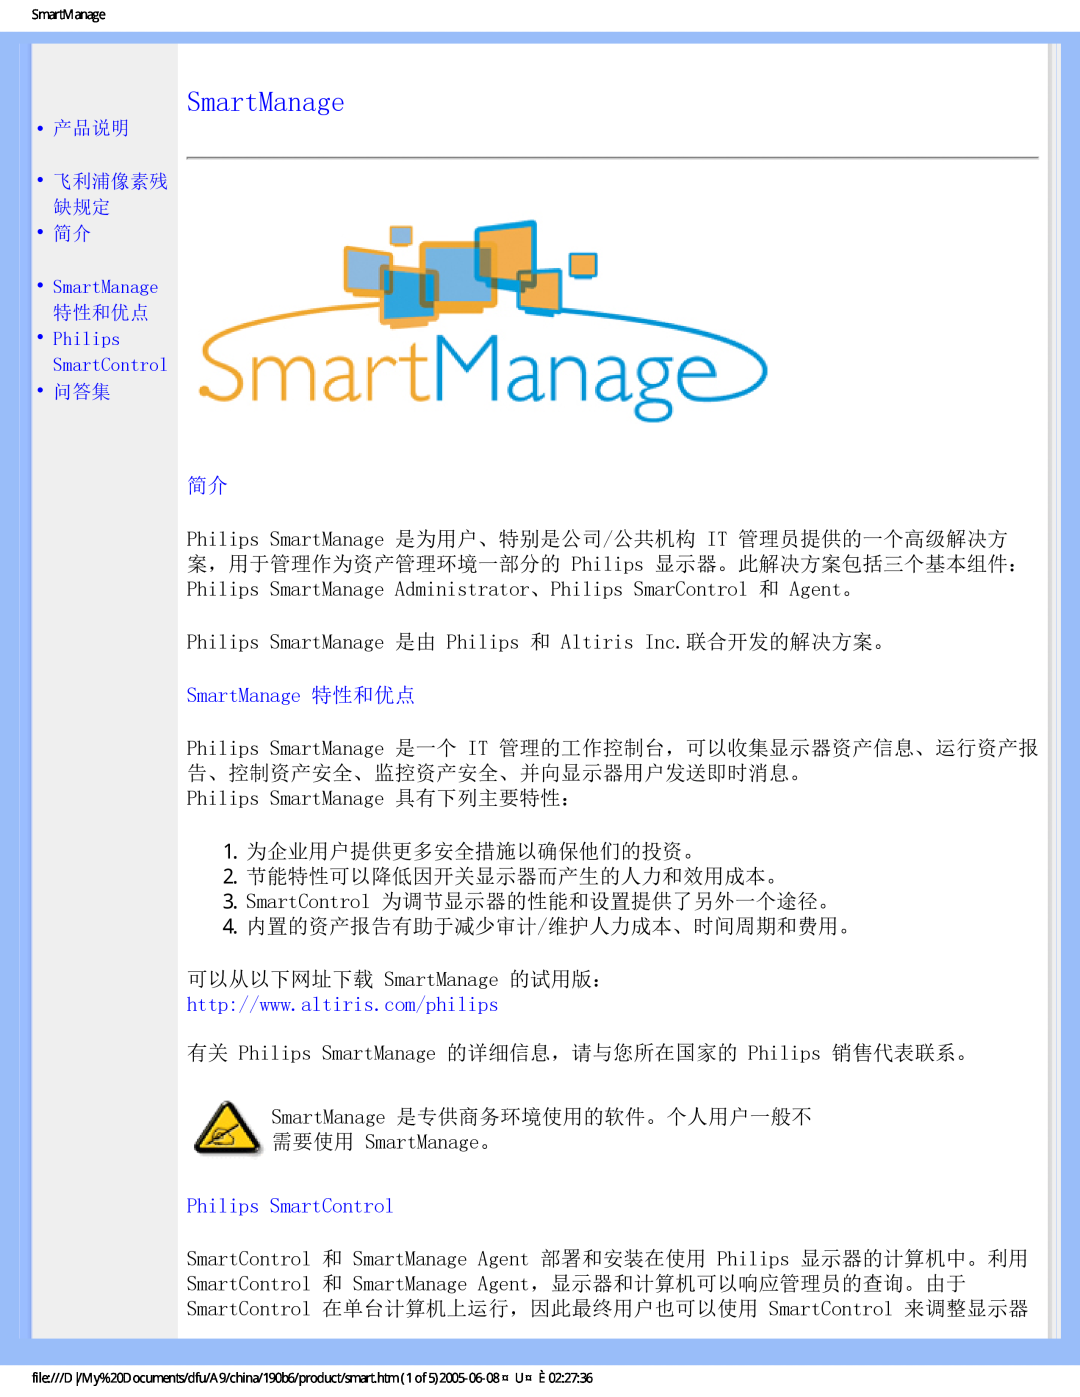 Philips 190B6 user manual SmartManage 特性和优点, Philips SmartControl, 产品说明 